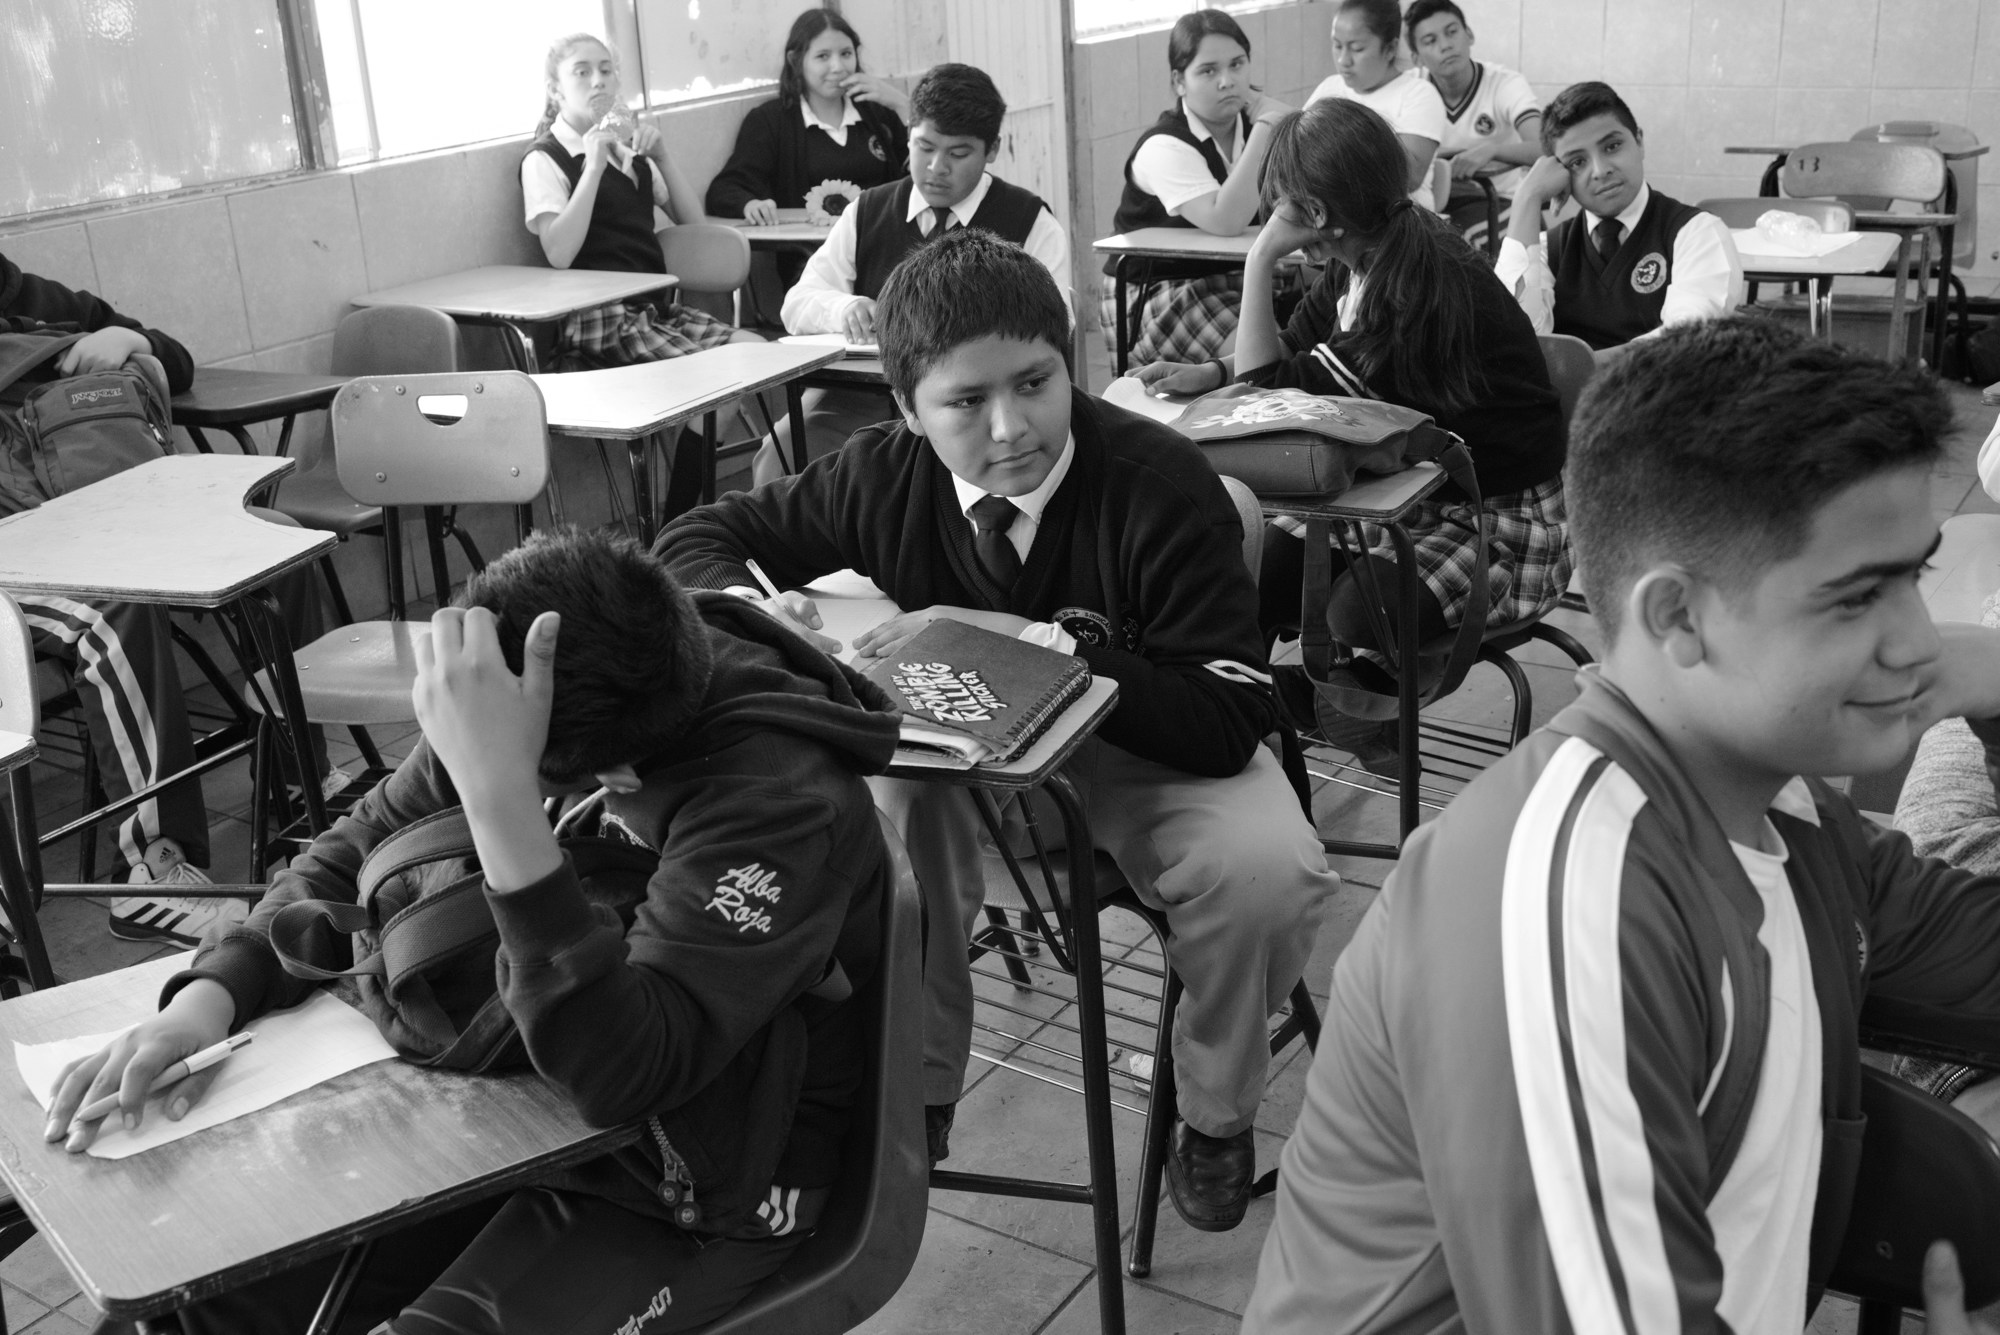 Alexander, 13, in Spanish class at Escuela Secundaria Sindicato Alba Roja.